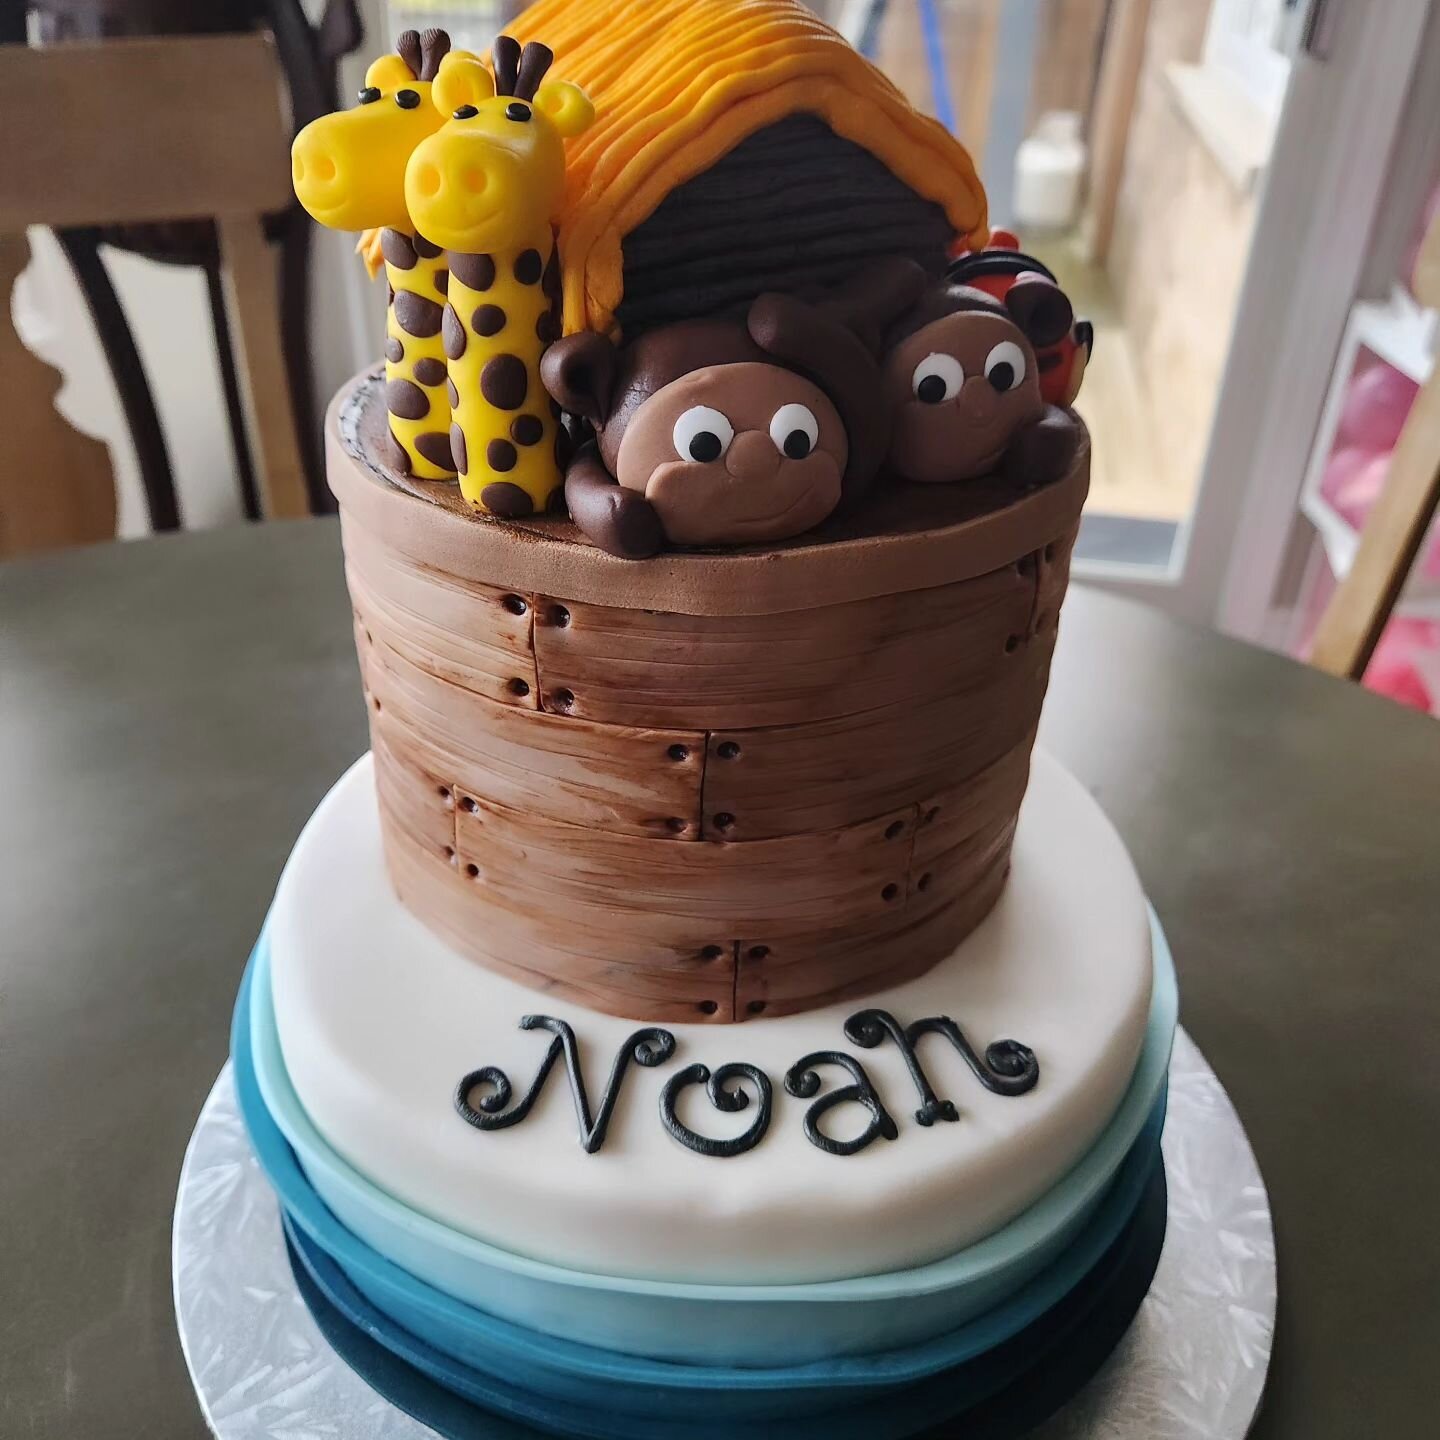 Noah's Ark Inspired First Birthday Cake
Happy 1st Birthday Noah!!!
.
.
#cake #cakeofinstagram #cakedesign #cakedecorator #cakeart #cakecakecake #foodart #birthdaycake #birthday #noahsark #noahsarkcake #noahsarkbirthday